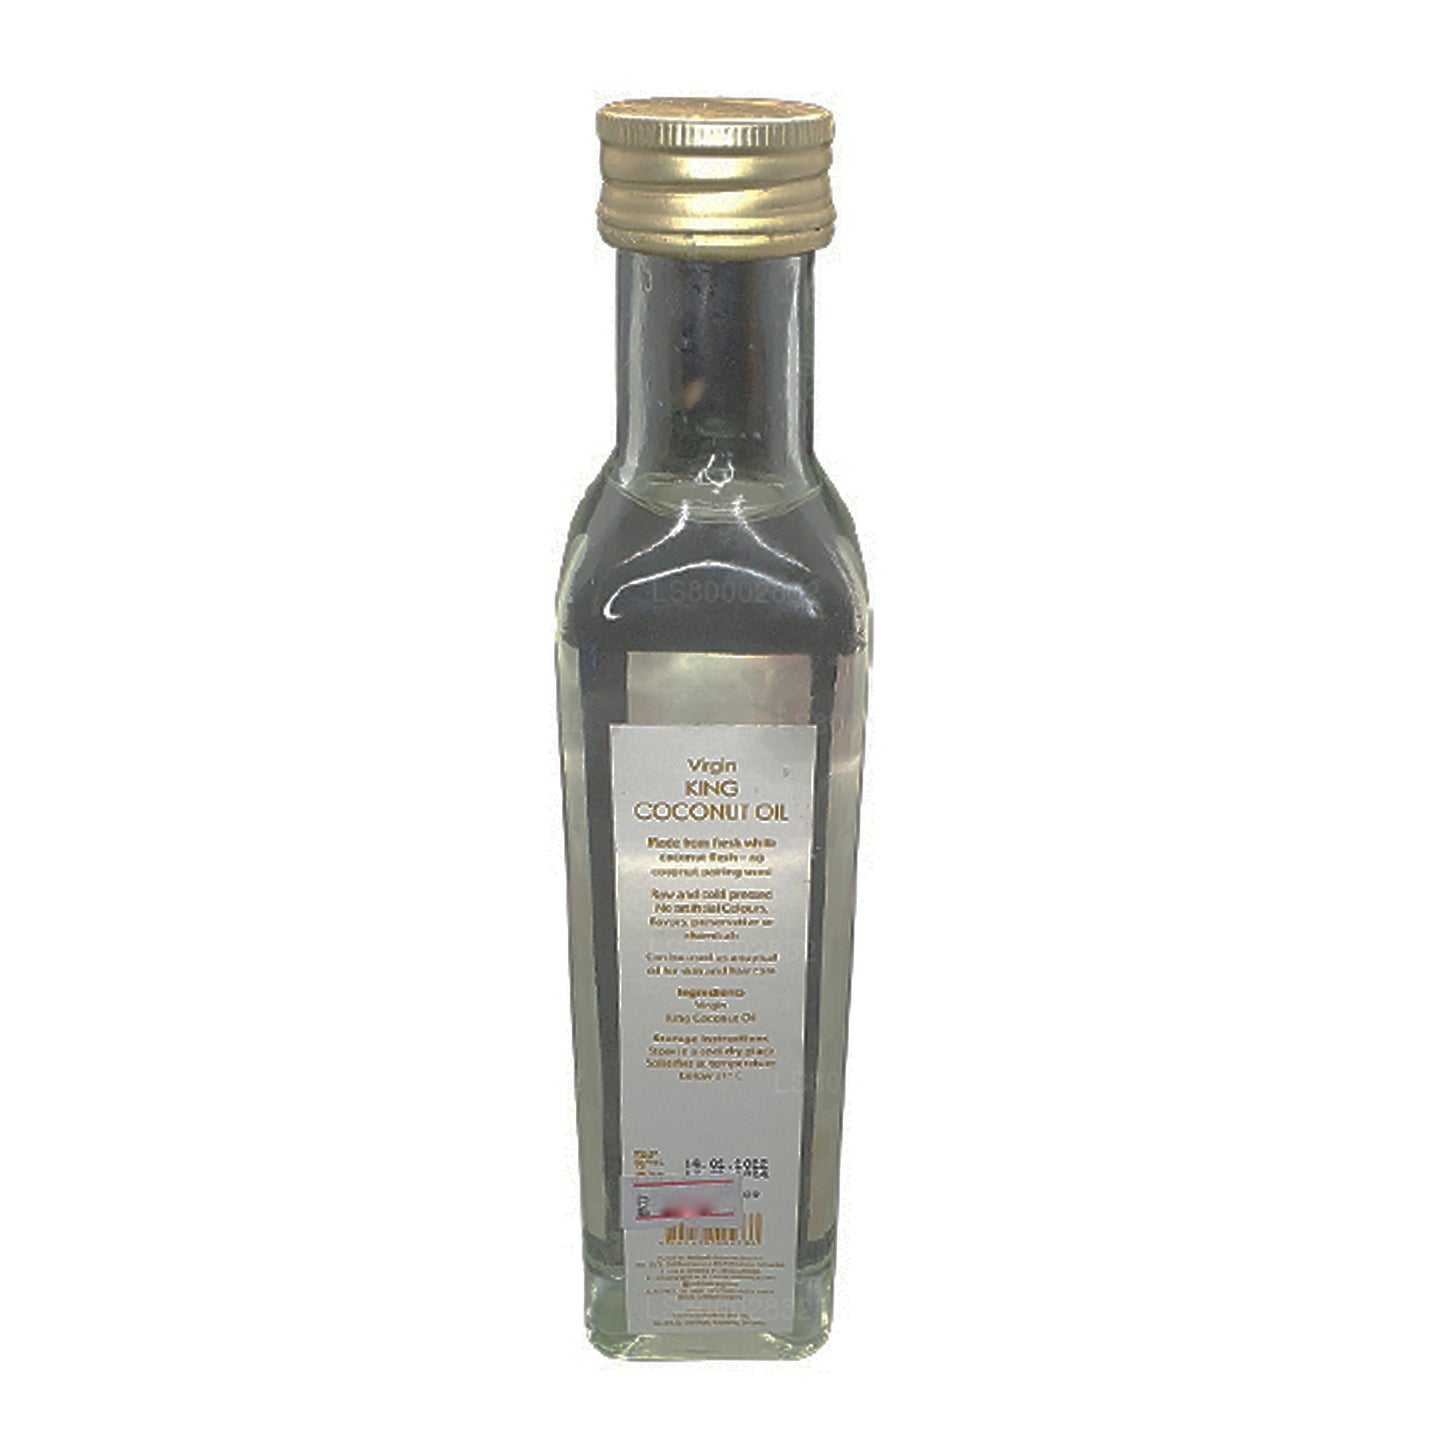 Siddhalepa King Coconut Oil (250ml)